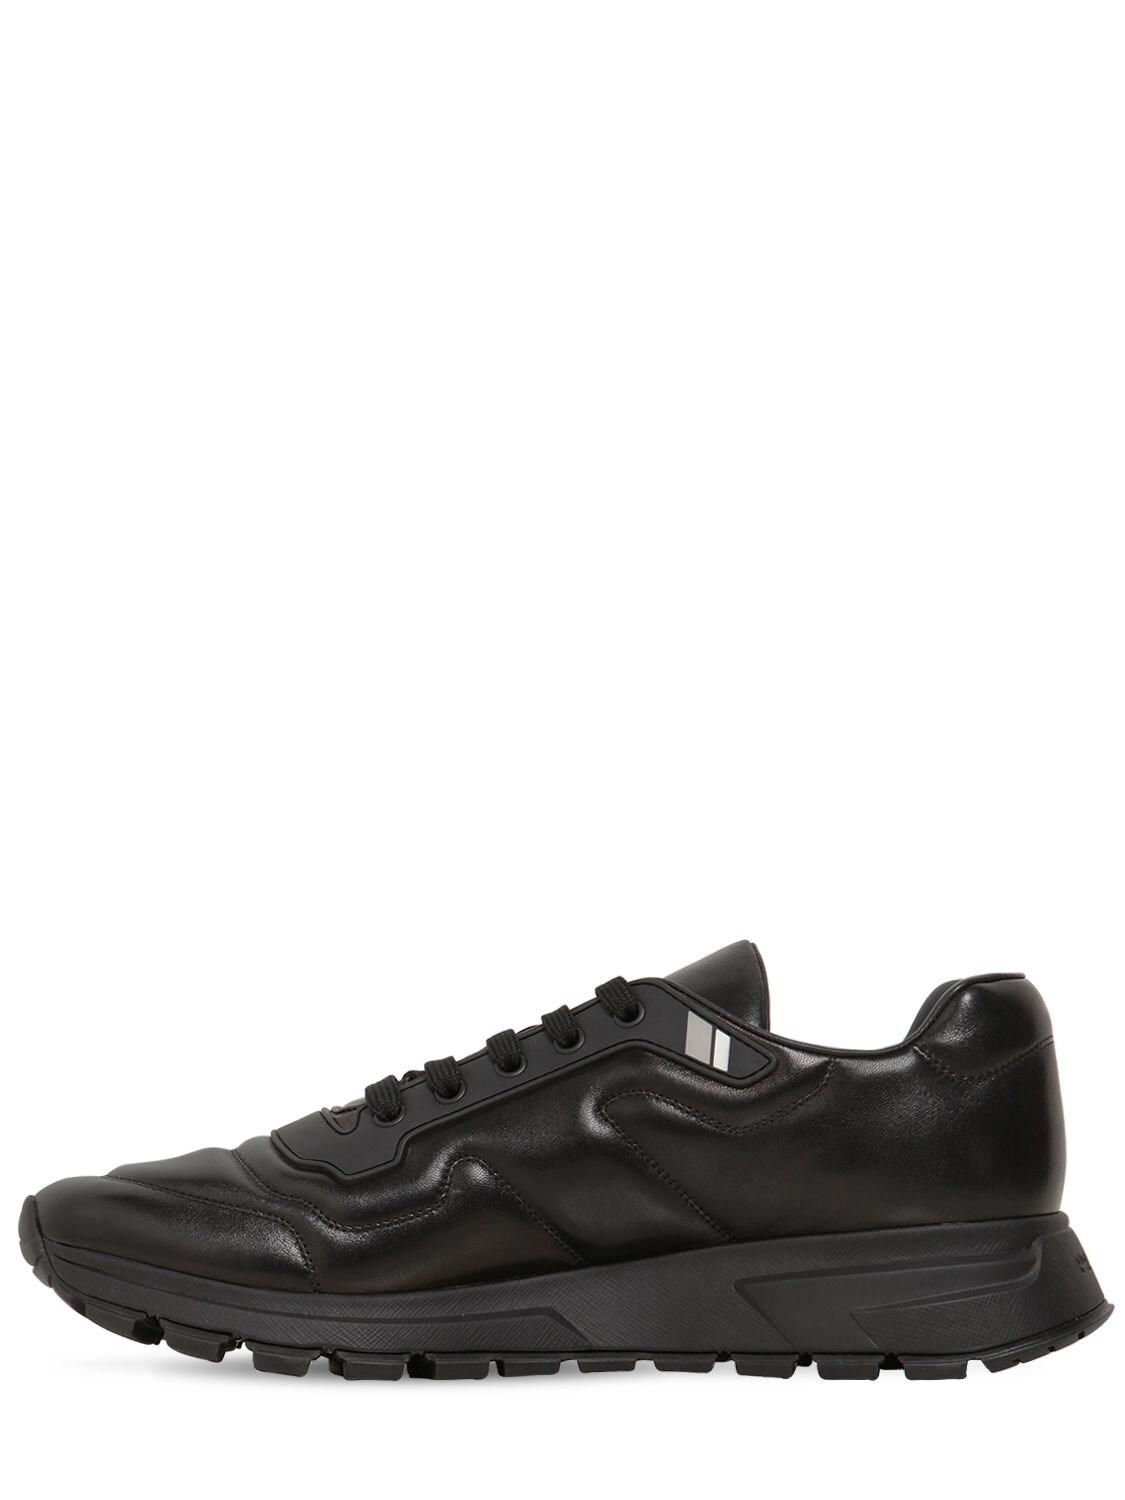 Prada Prax 01 Nappa Running Leather Sneakers In Black For Men Lyst